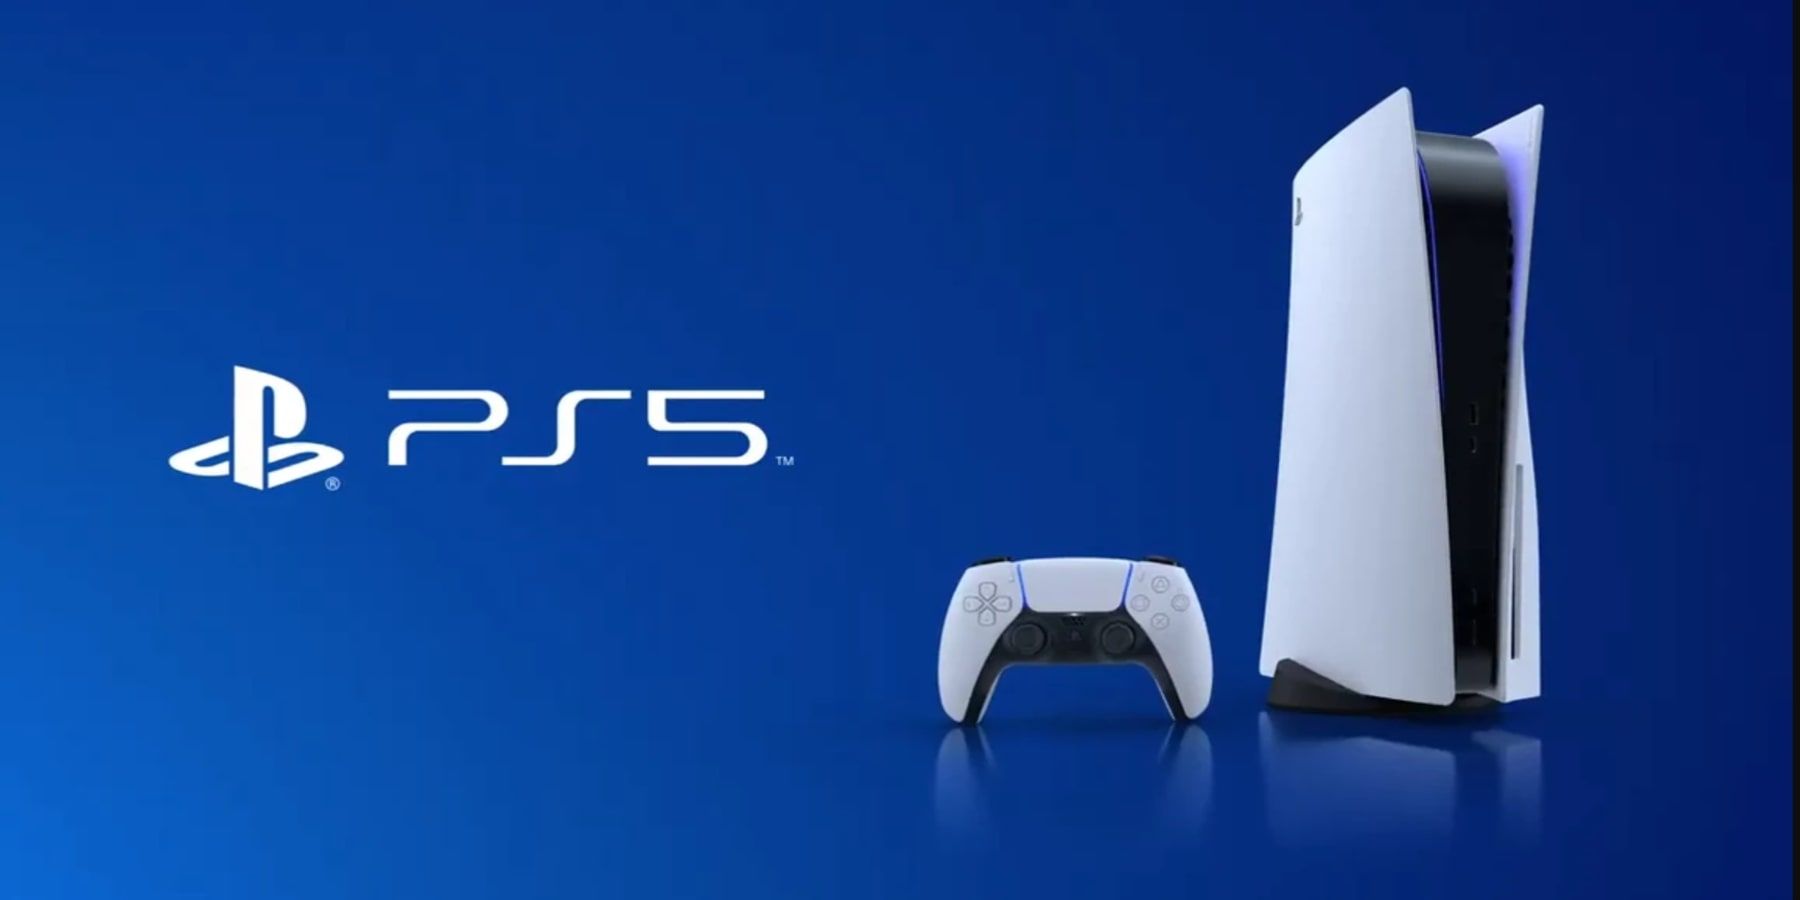 ps5-logo-console